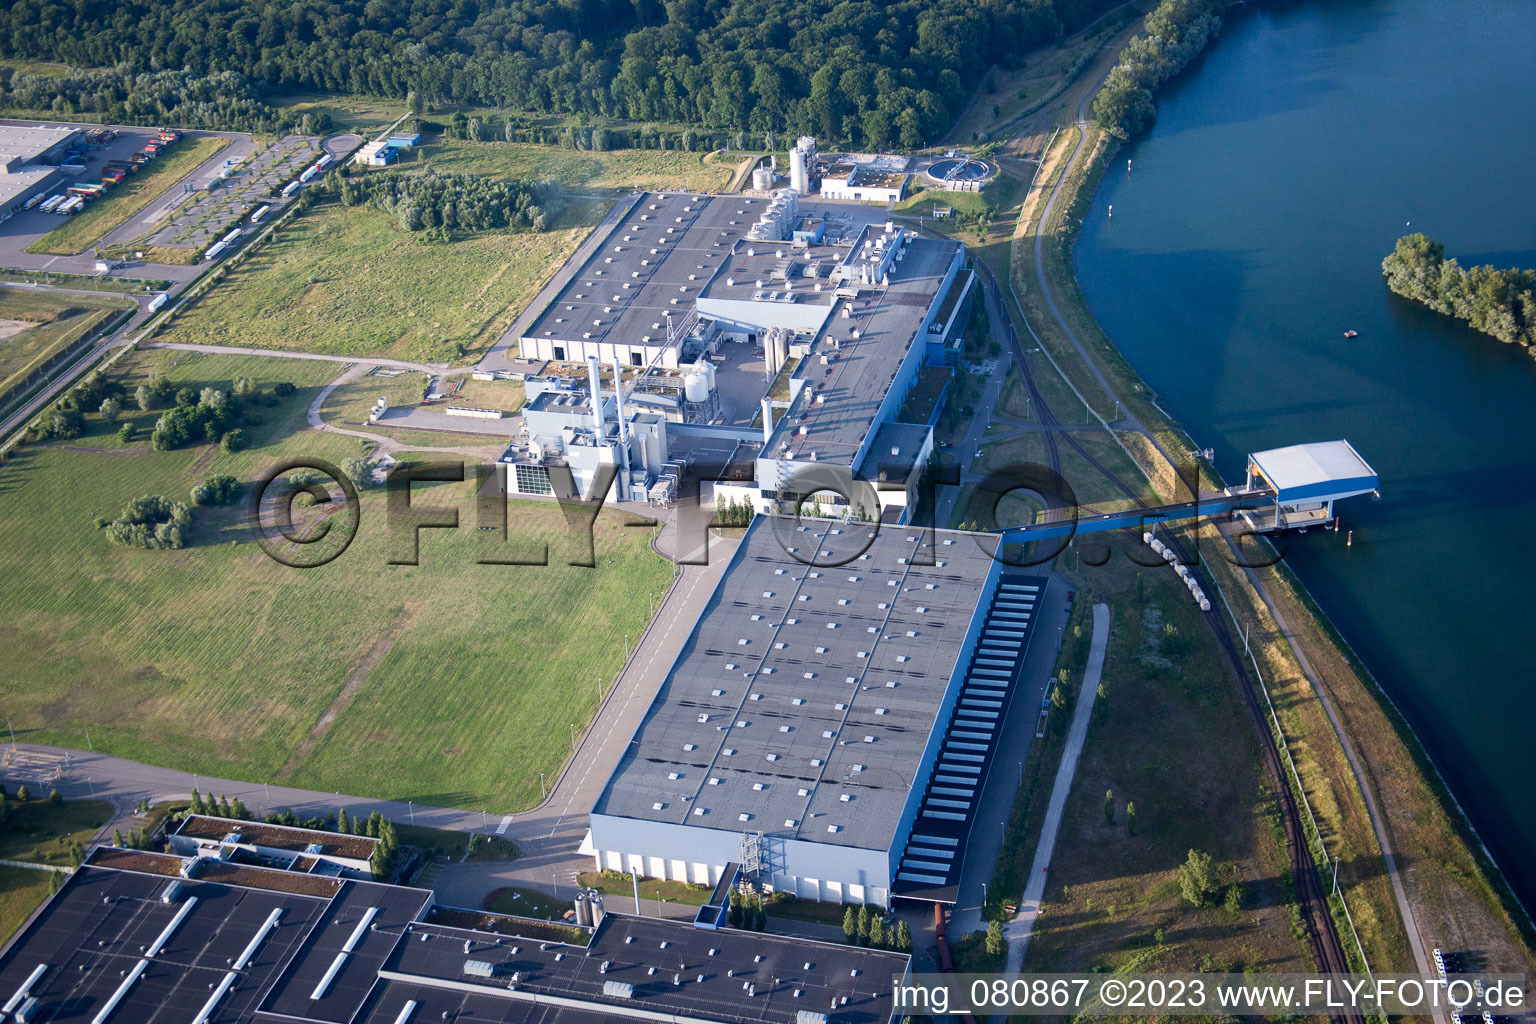 Oberwald industrial area in Wörth am Rhein in the state Rhineland-Palatinate, Germany